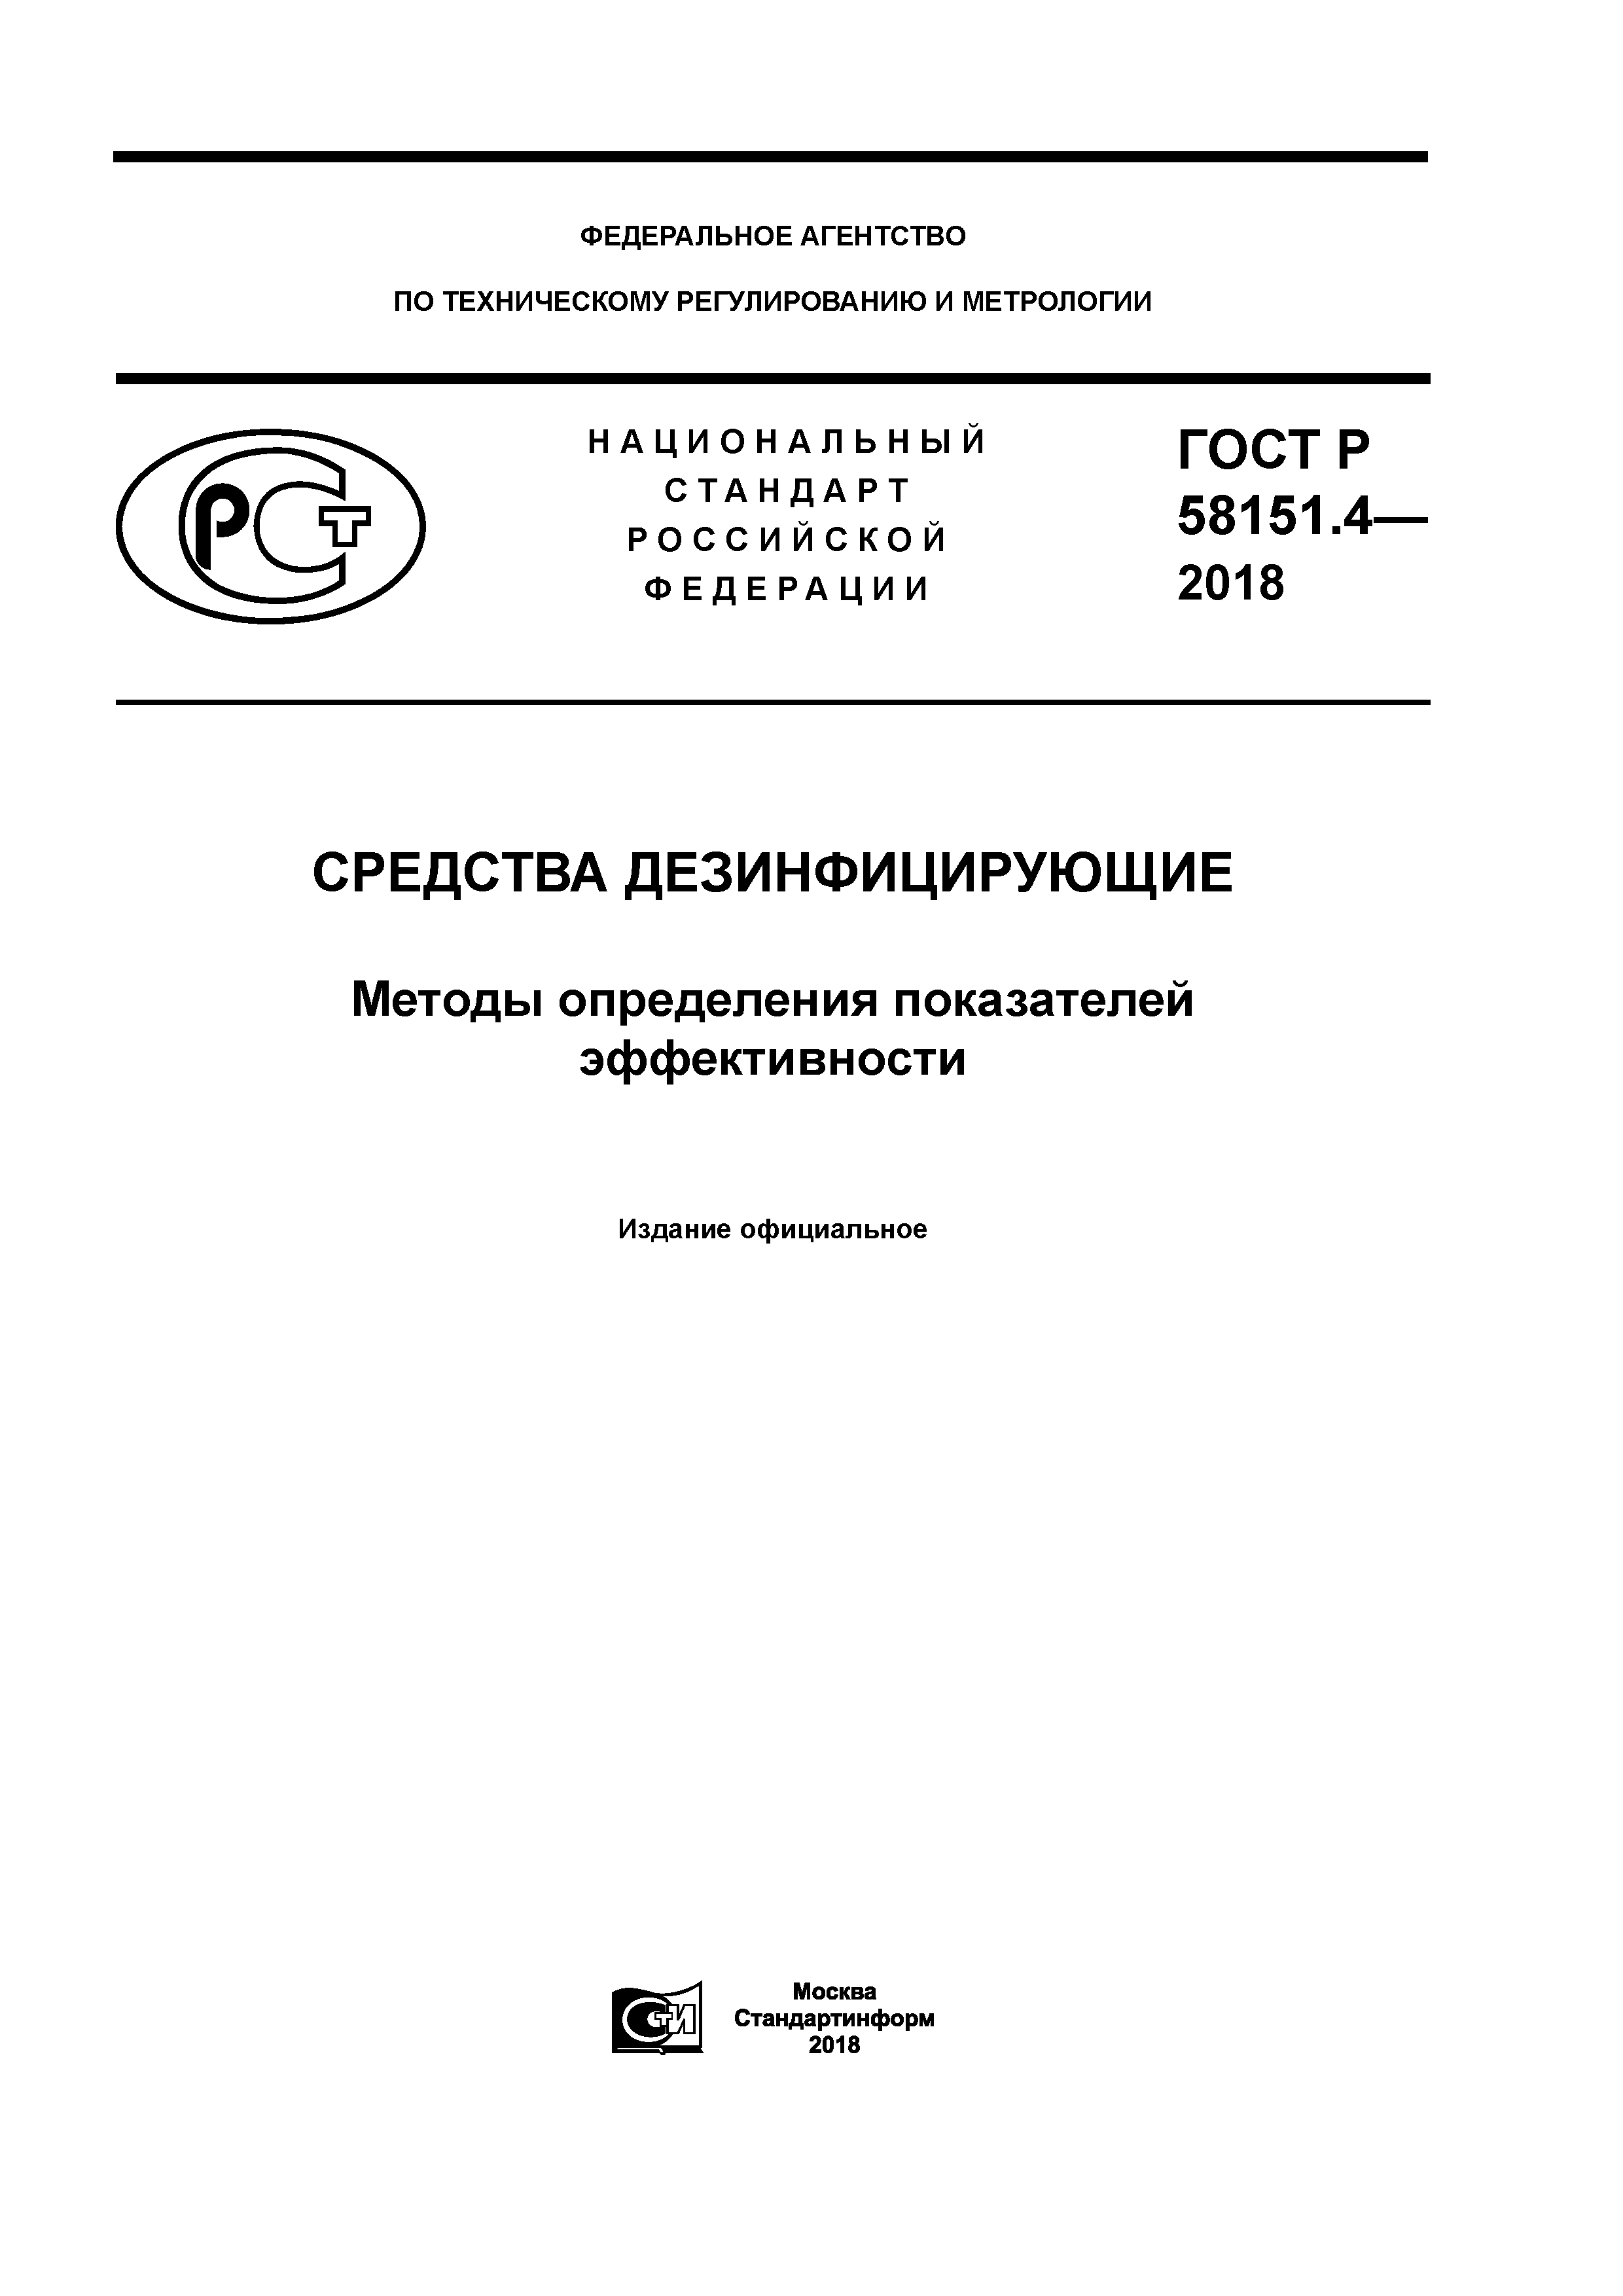 ГОСТ Р 58151.4-2018